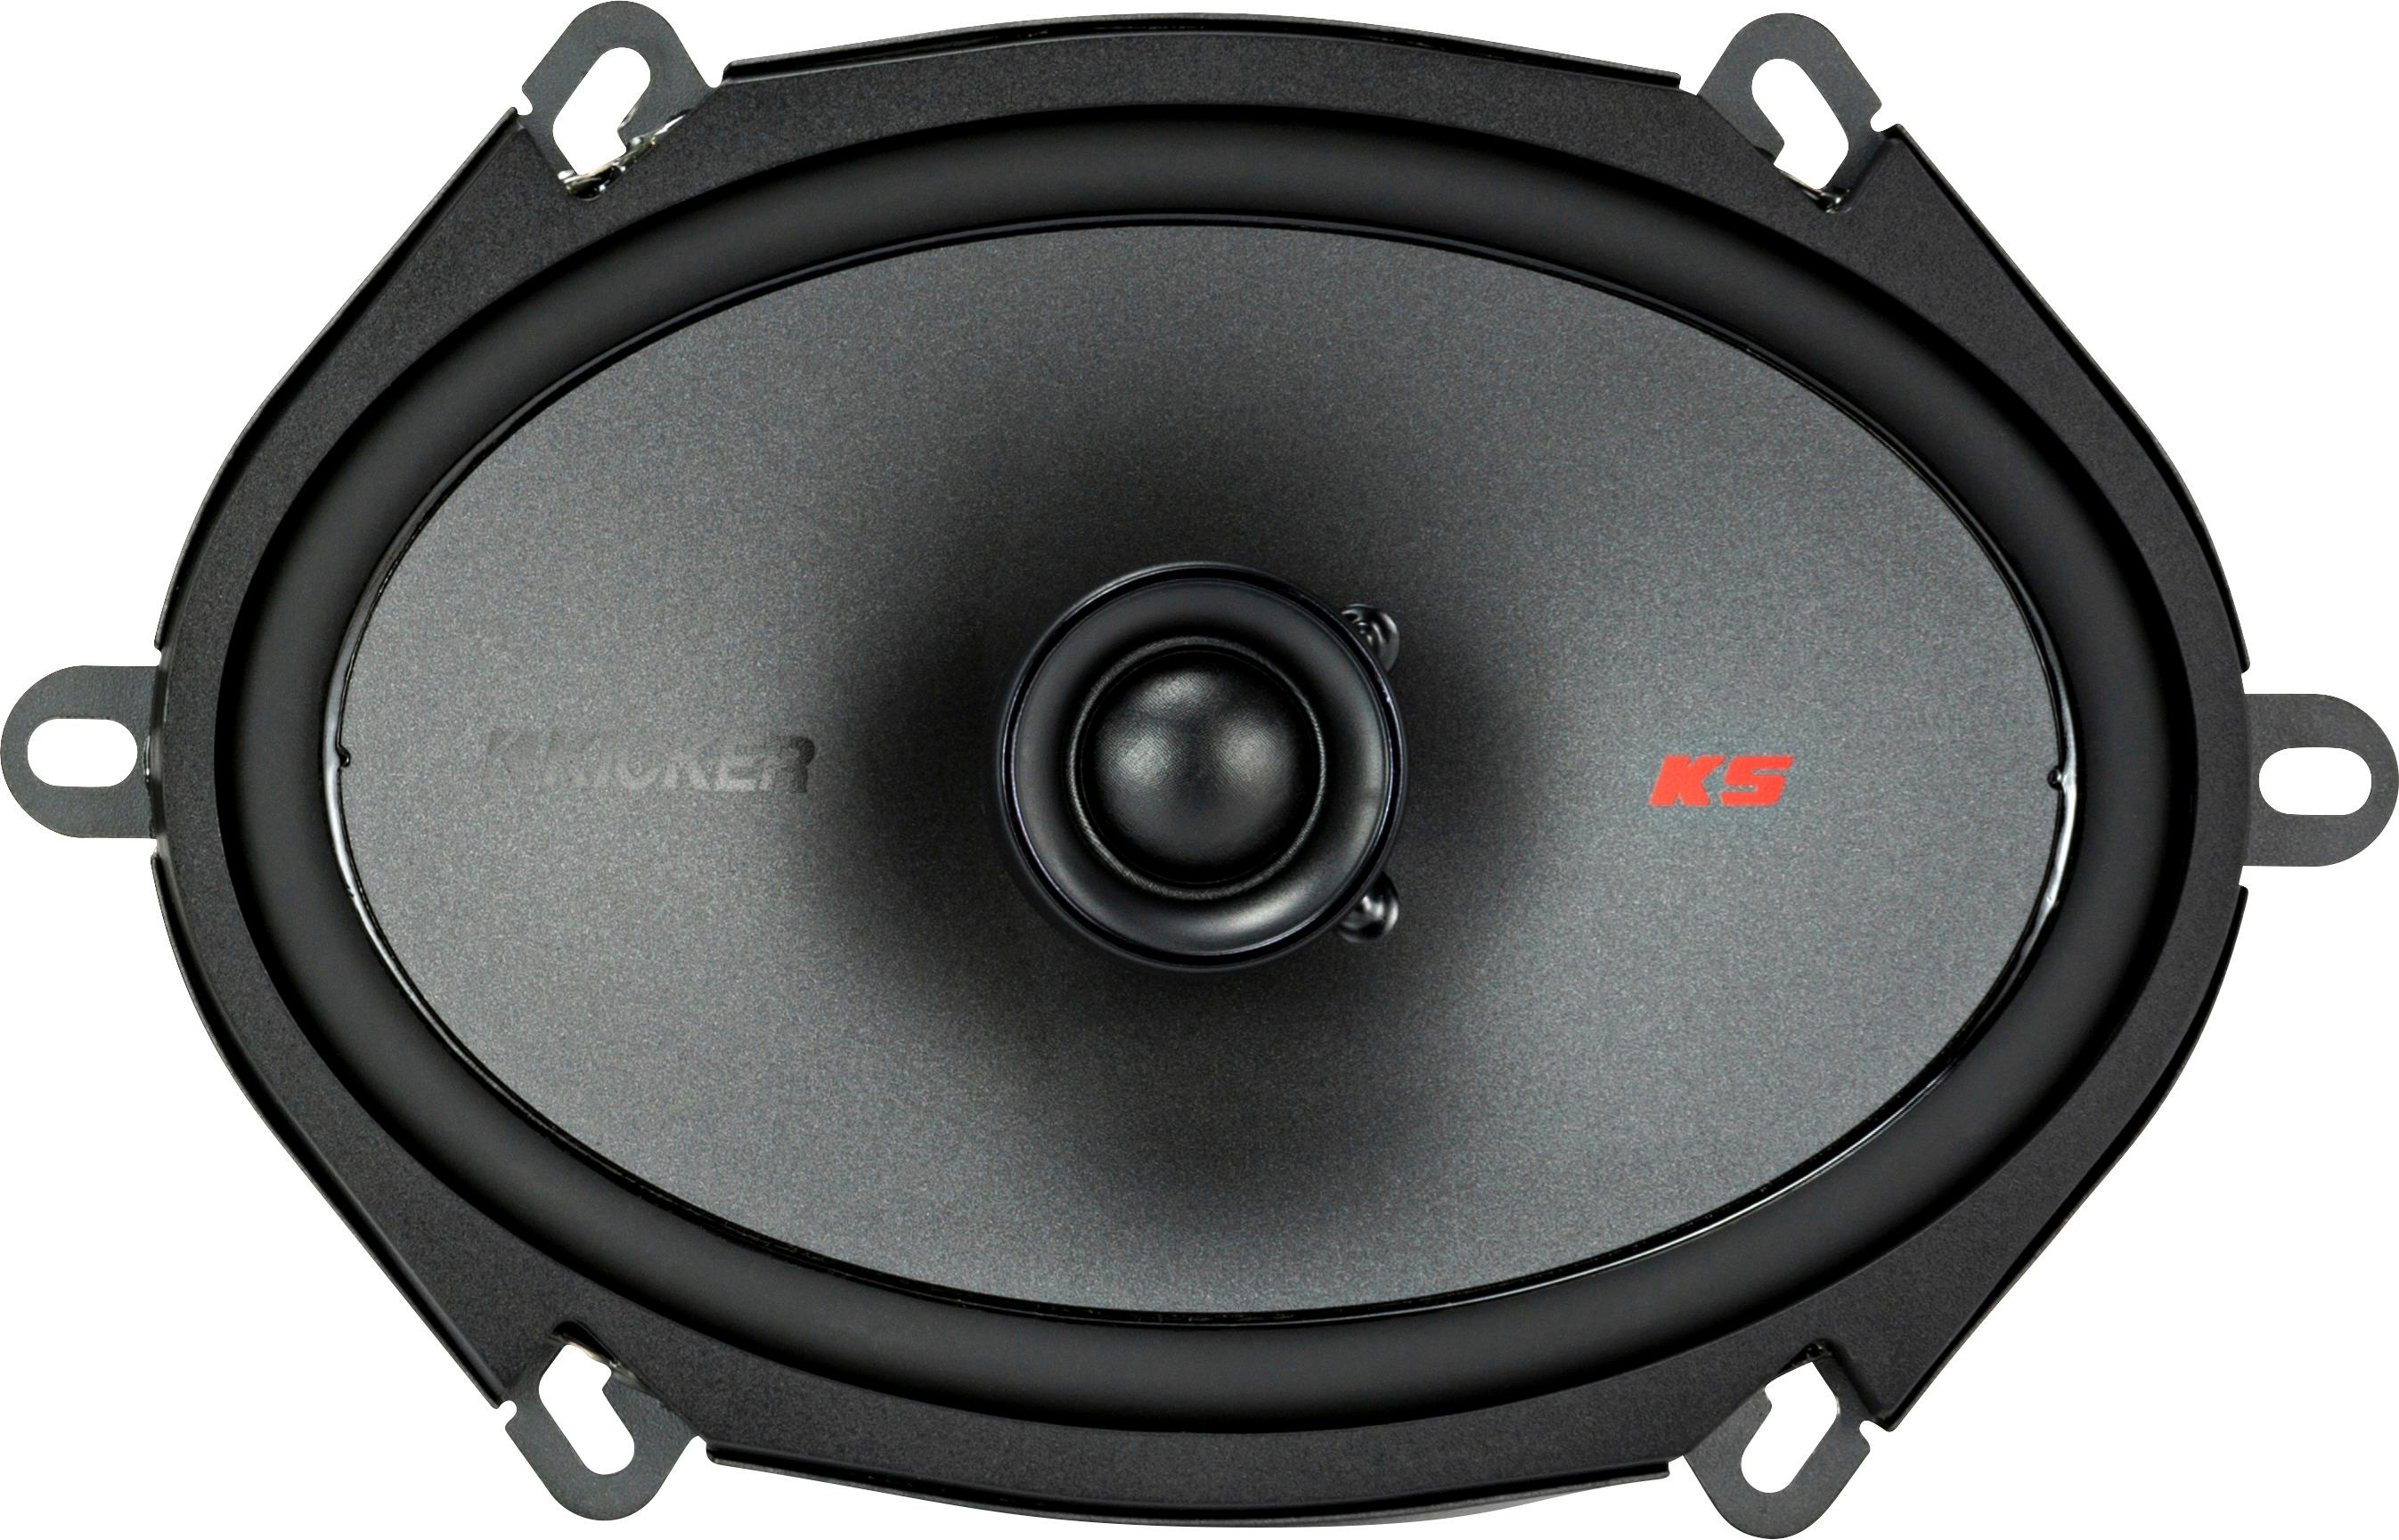 KICKER - KS Series 6" x 8" 2-Way Car Speaker with Polypropylene Cones (Each) - Black